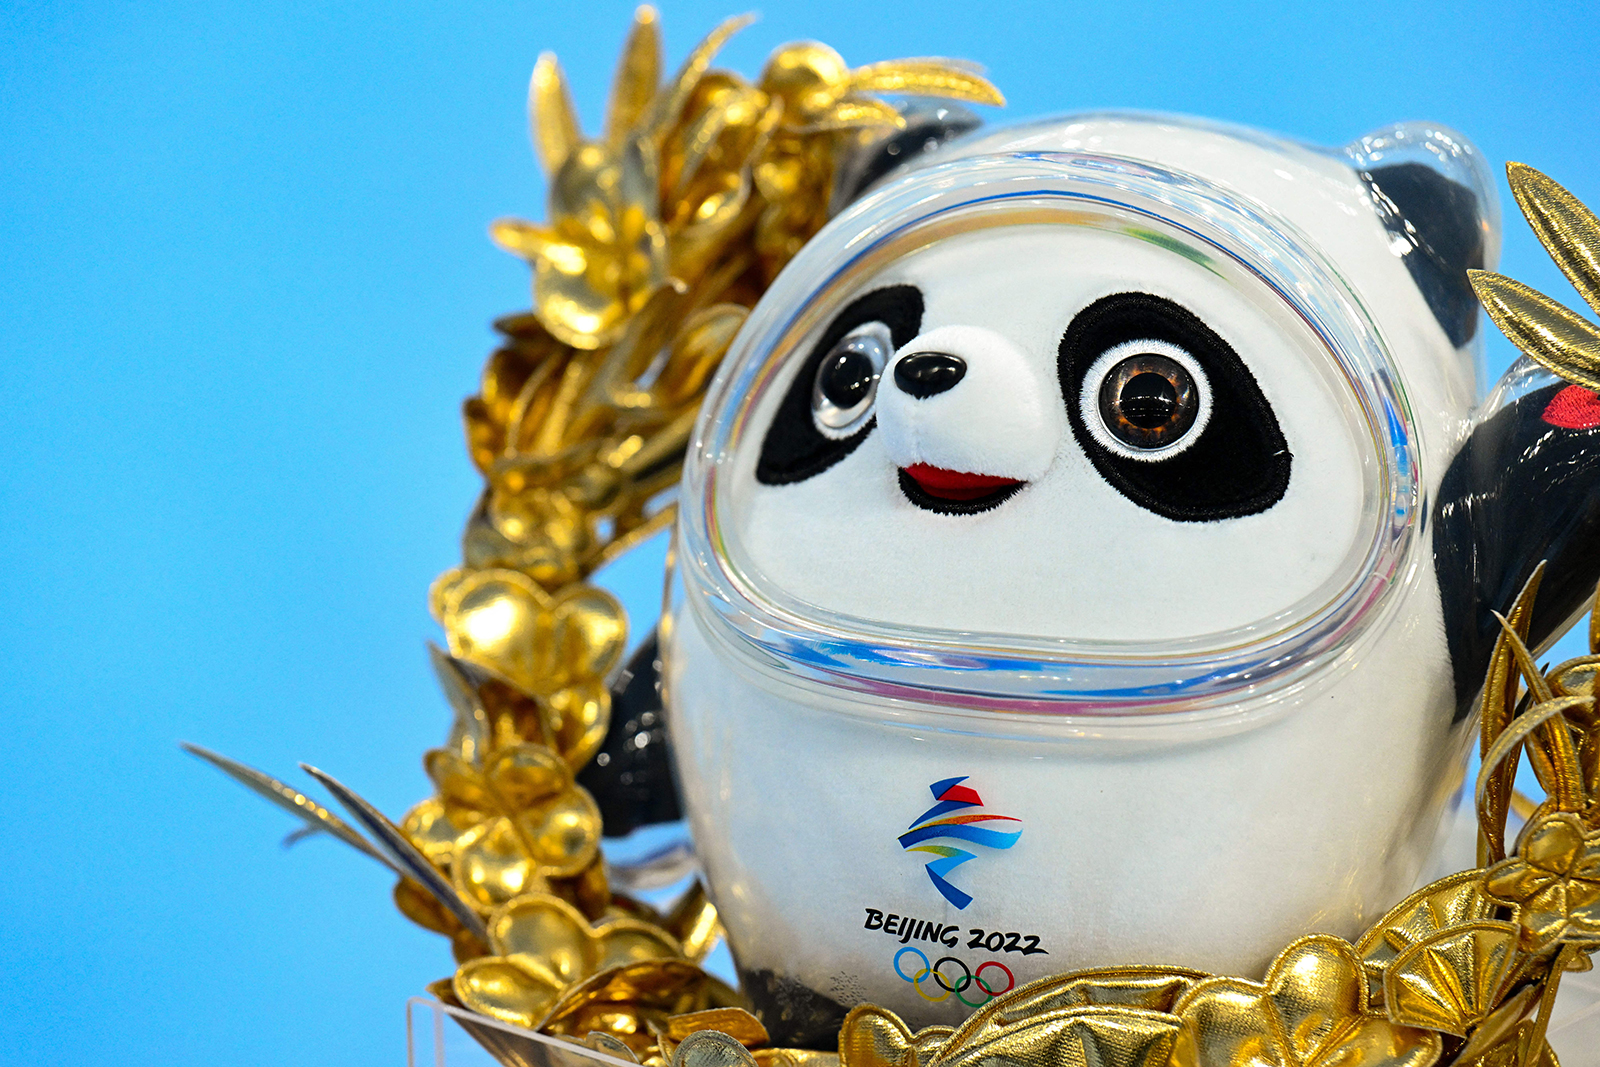 Beijing 2022 Winter Olympic Games mascot Bing Dwen Dwen.